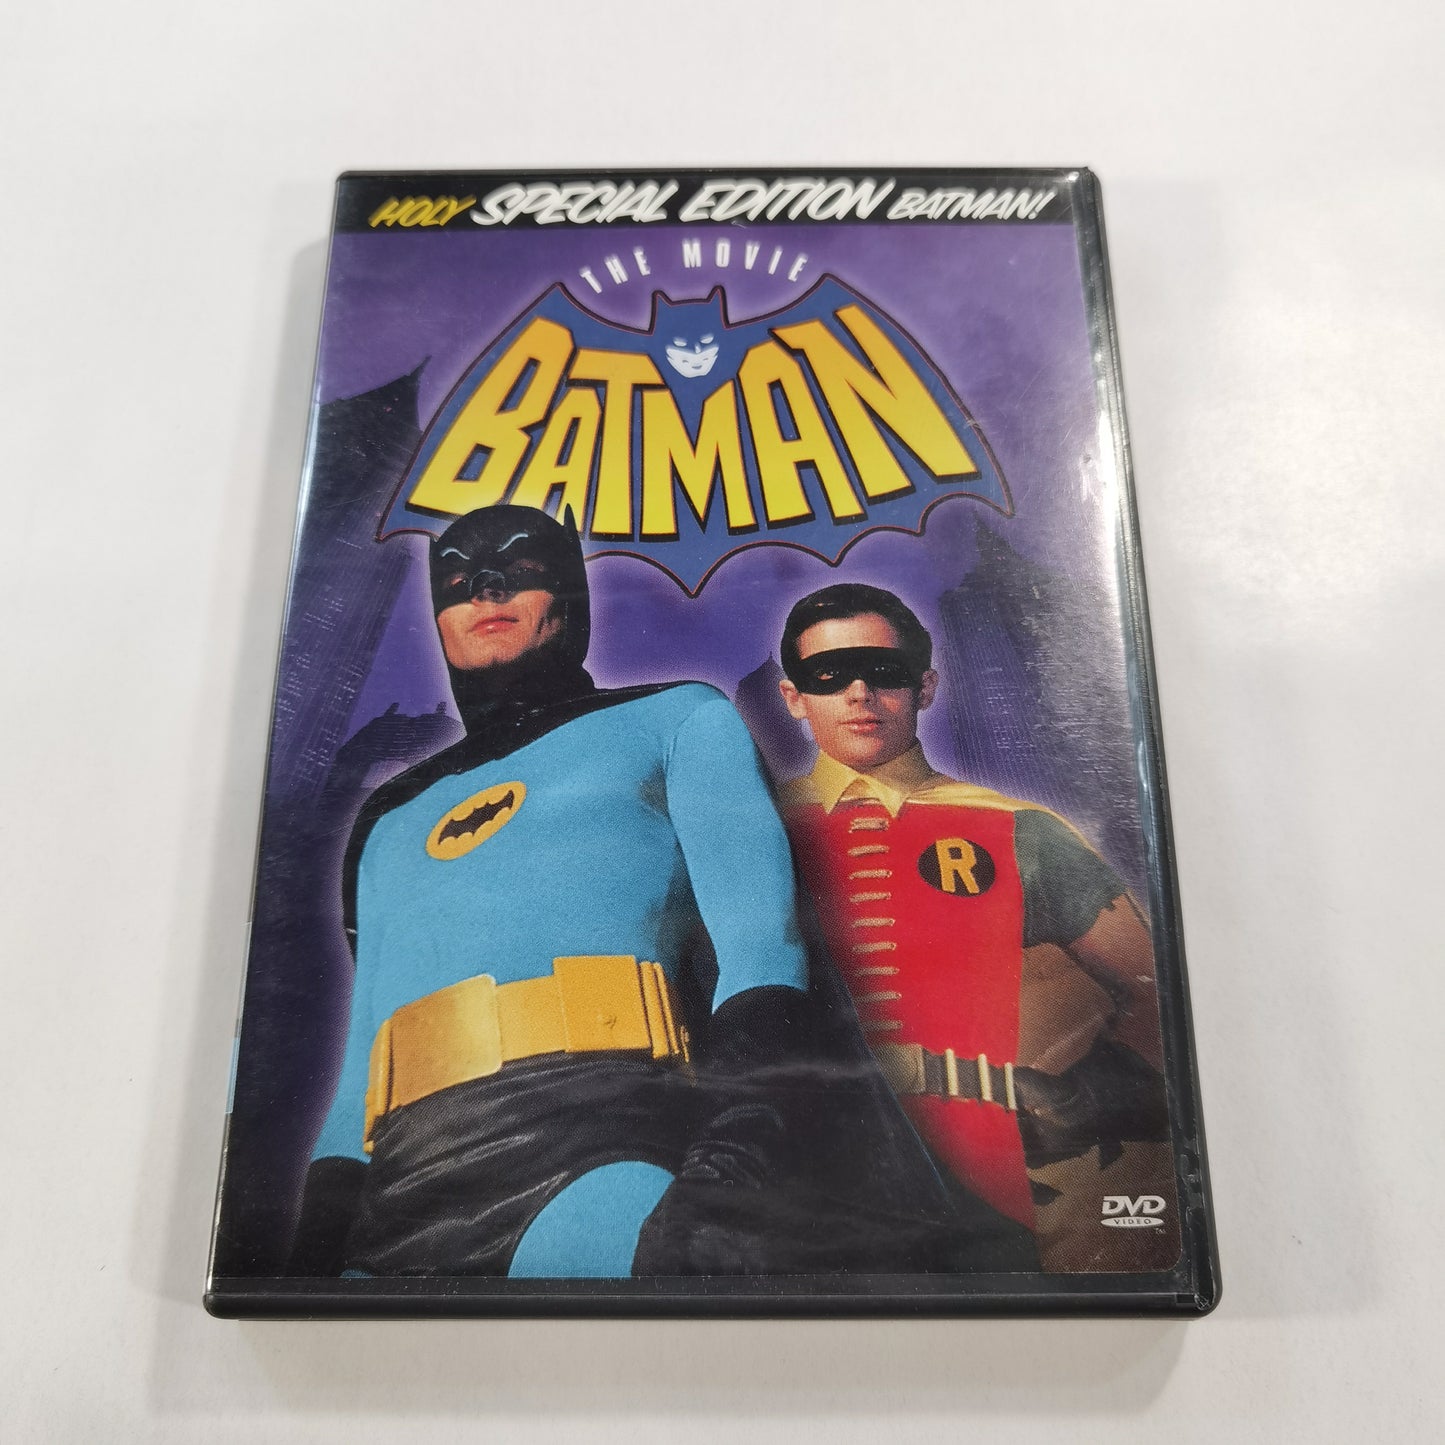 Batman (1966) - DVD US 2001 Holy Special Edition Batman!